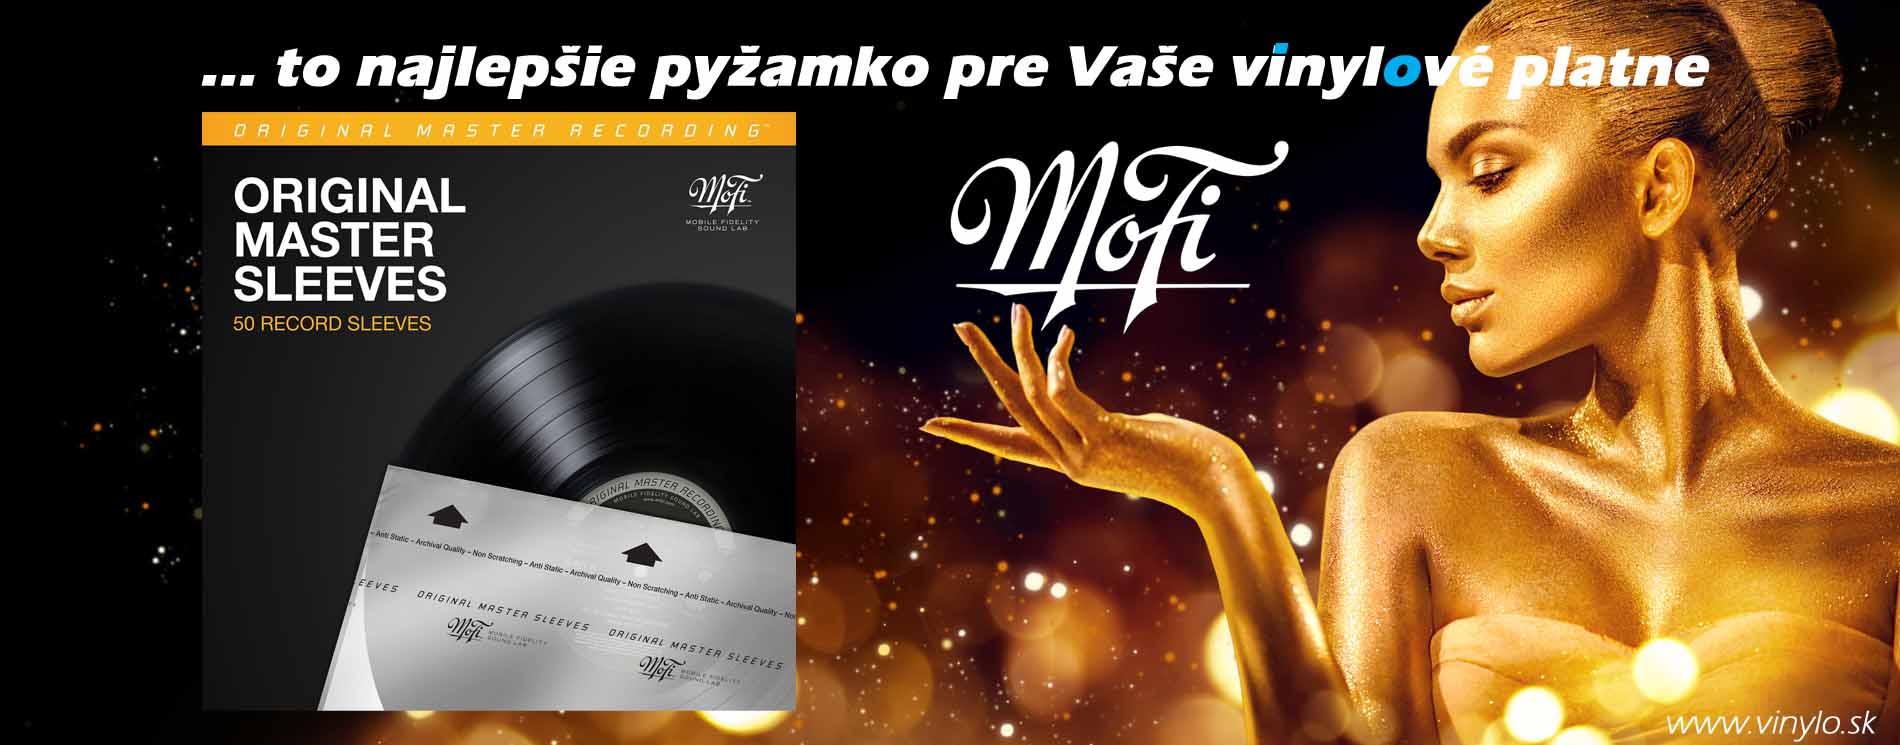 MOFI-banner-vinylo-sk-original-mater-sleeves copy